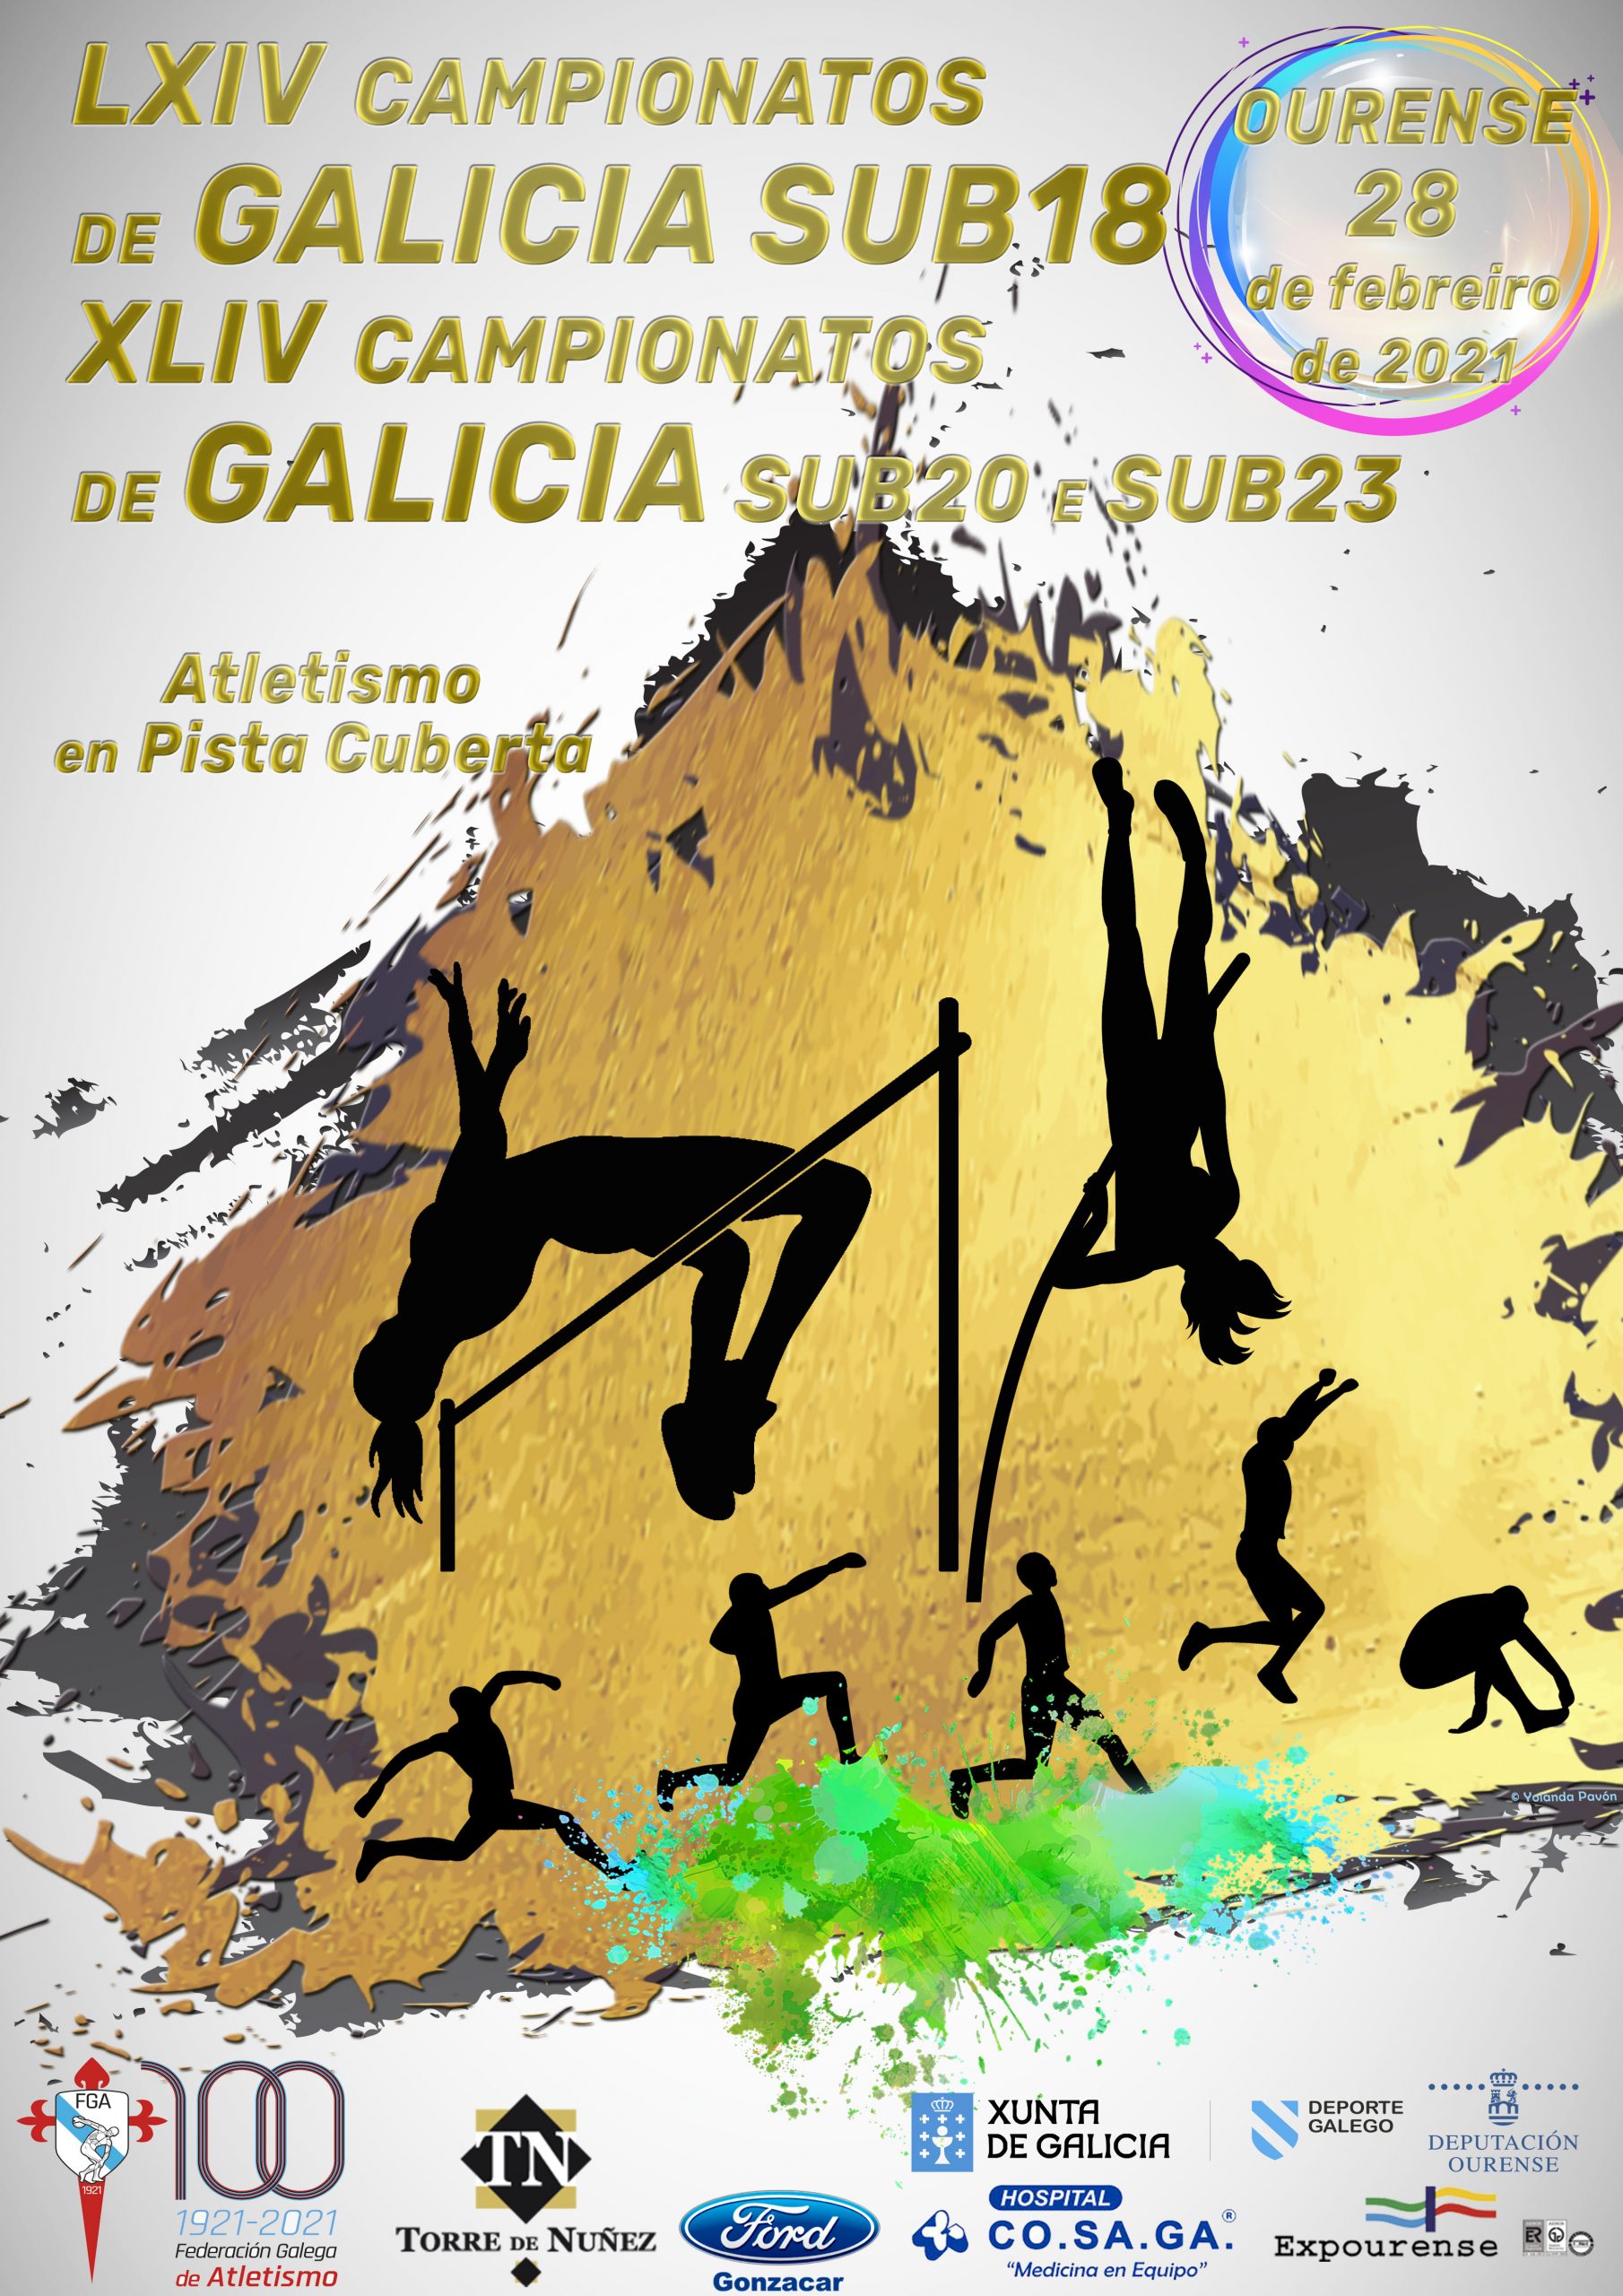 LXIV Campionato de Galicia Sub18 – XLIV Sub20 – Sub23 en Pista Cuberta